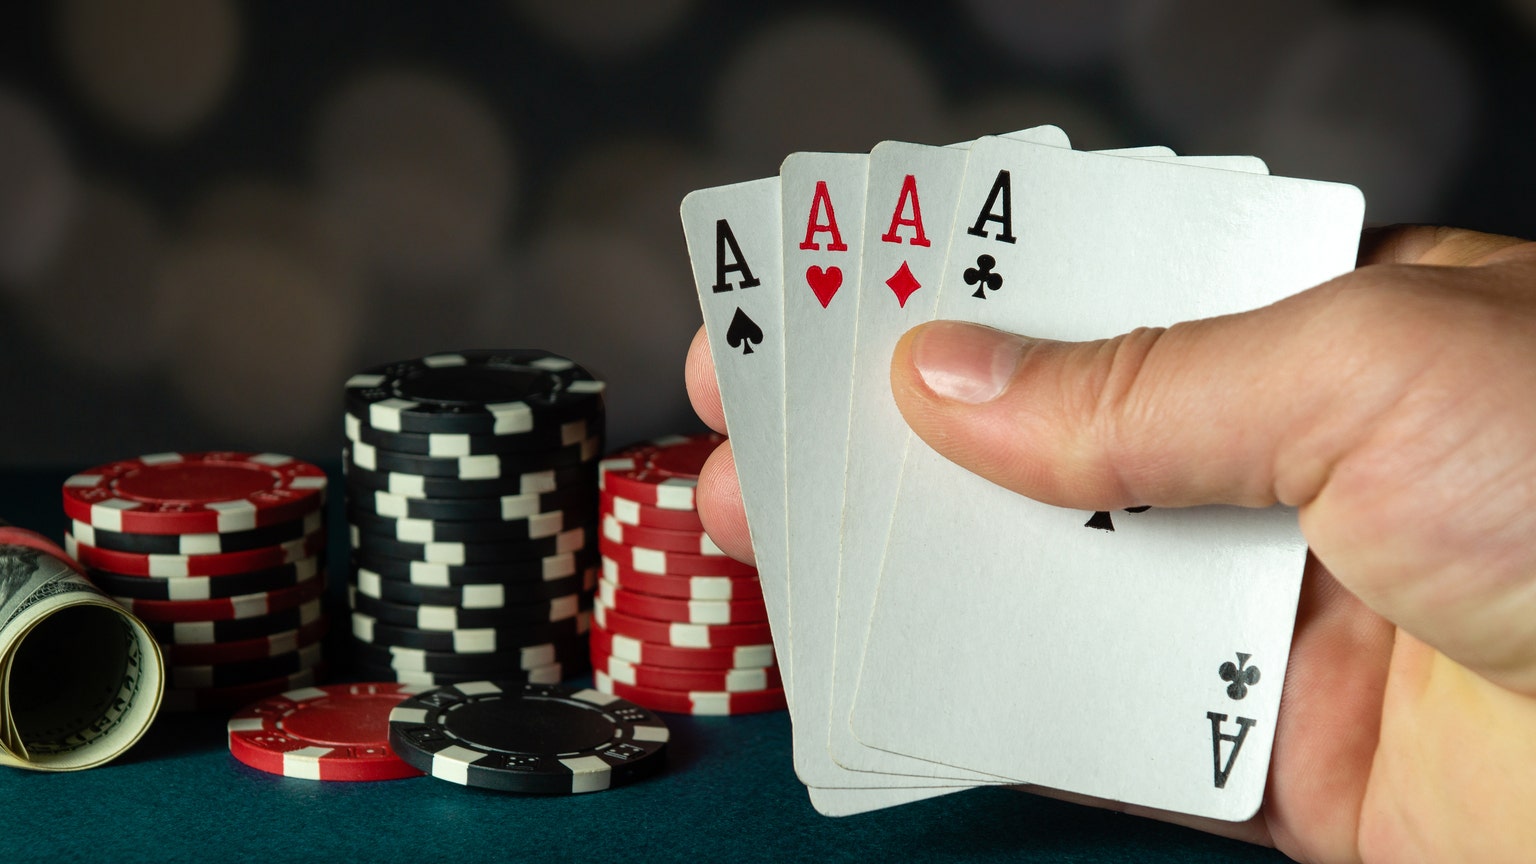 World's Most Expensive Poker Set for $7.5 Million